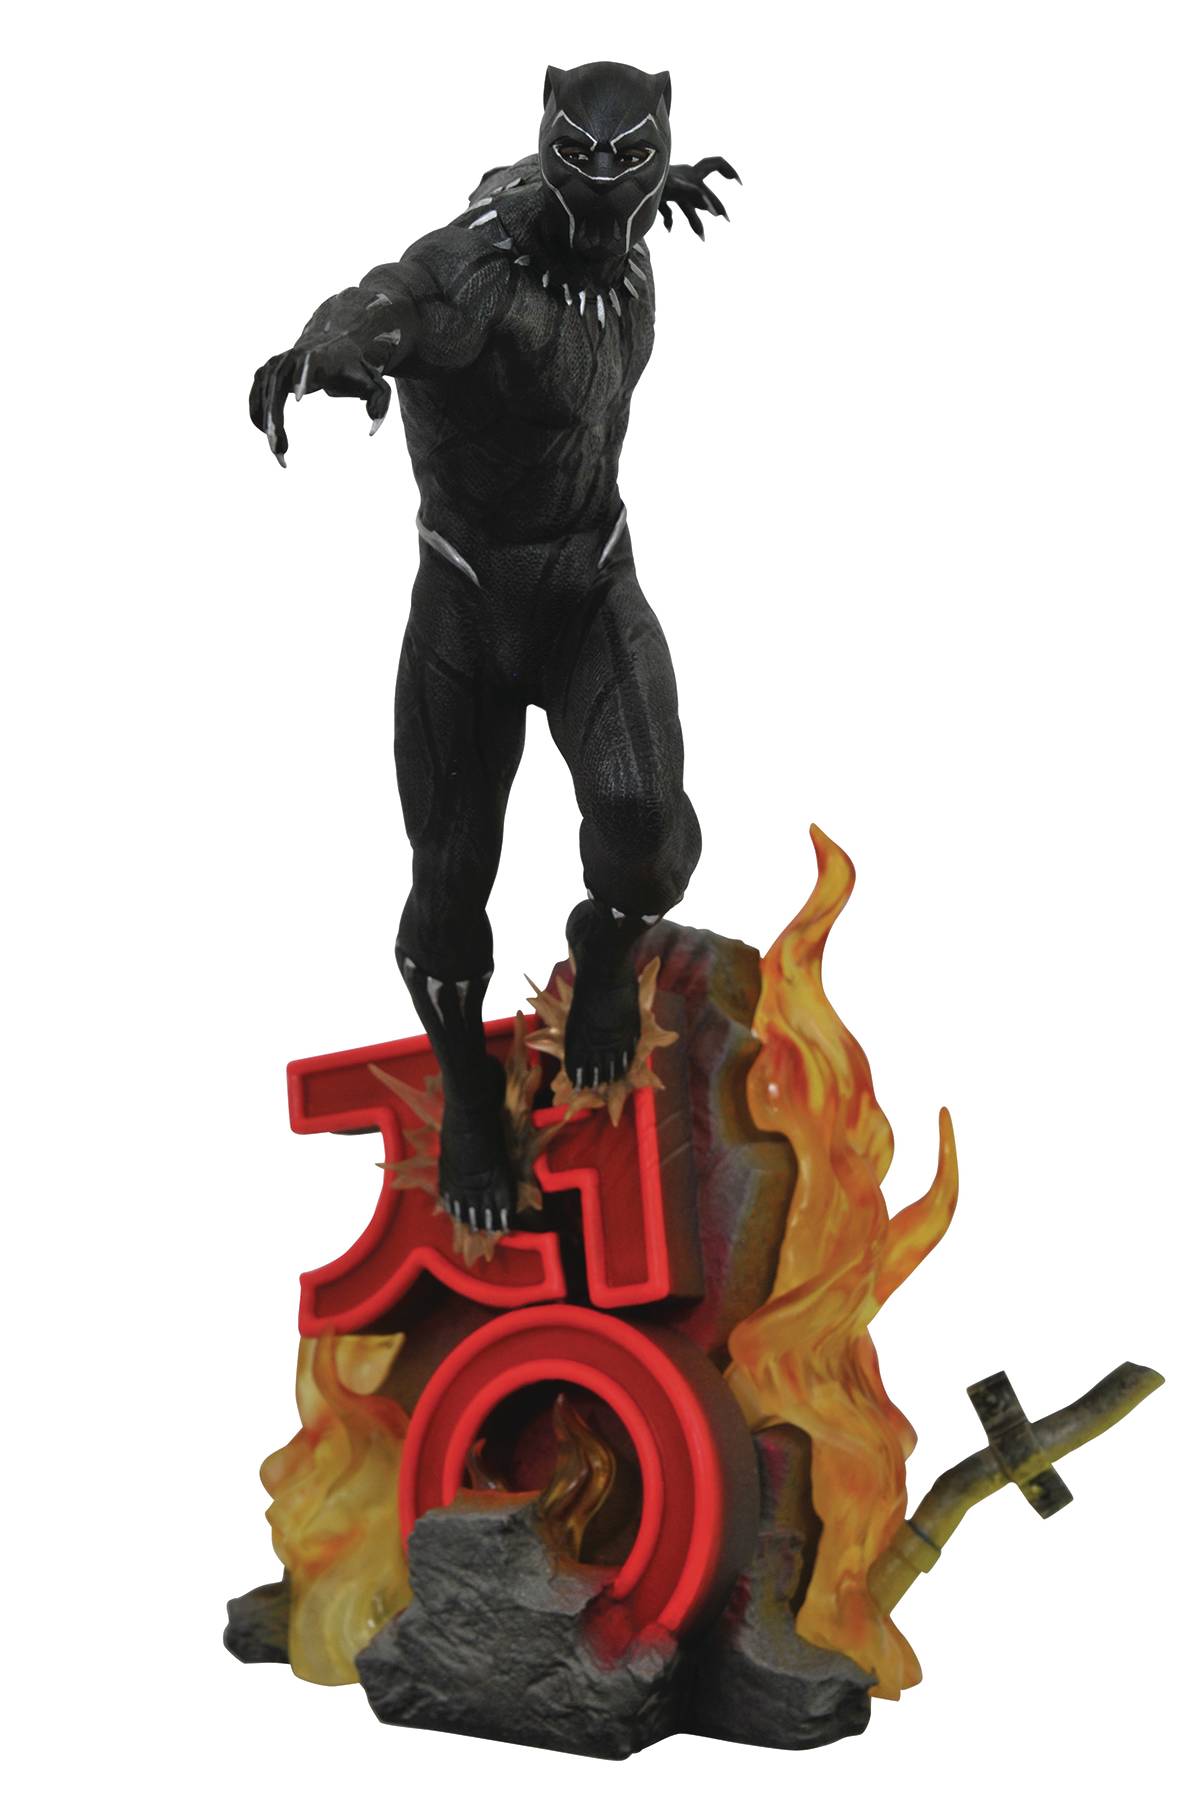 Marvel Premiere Black Panther Movie Statue